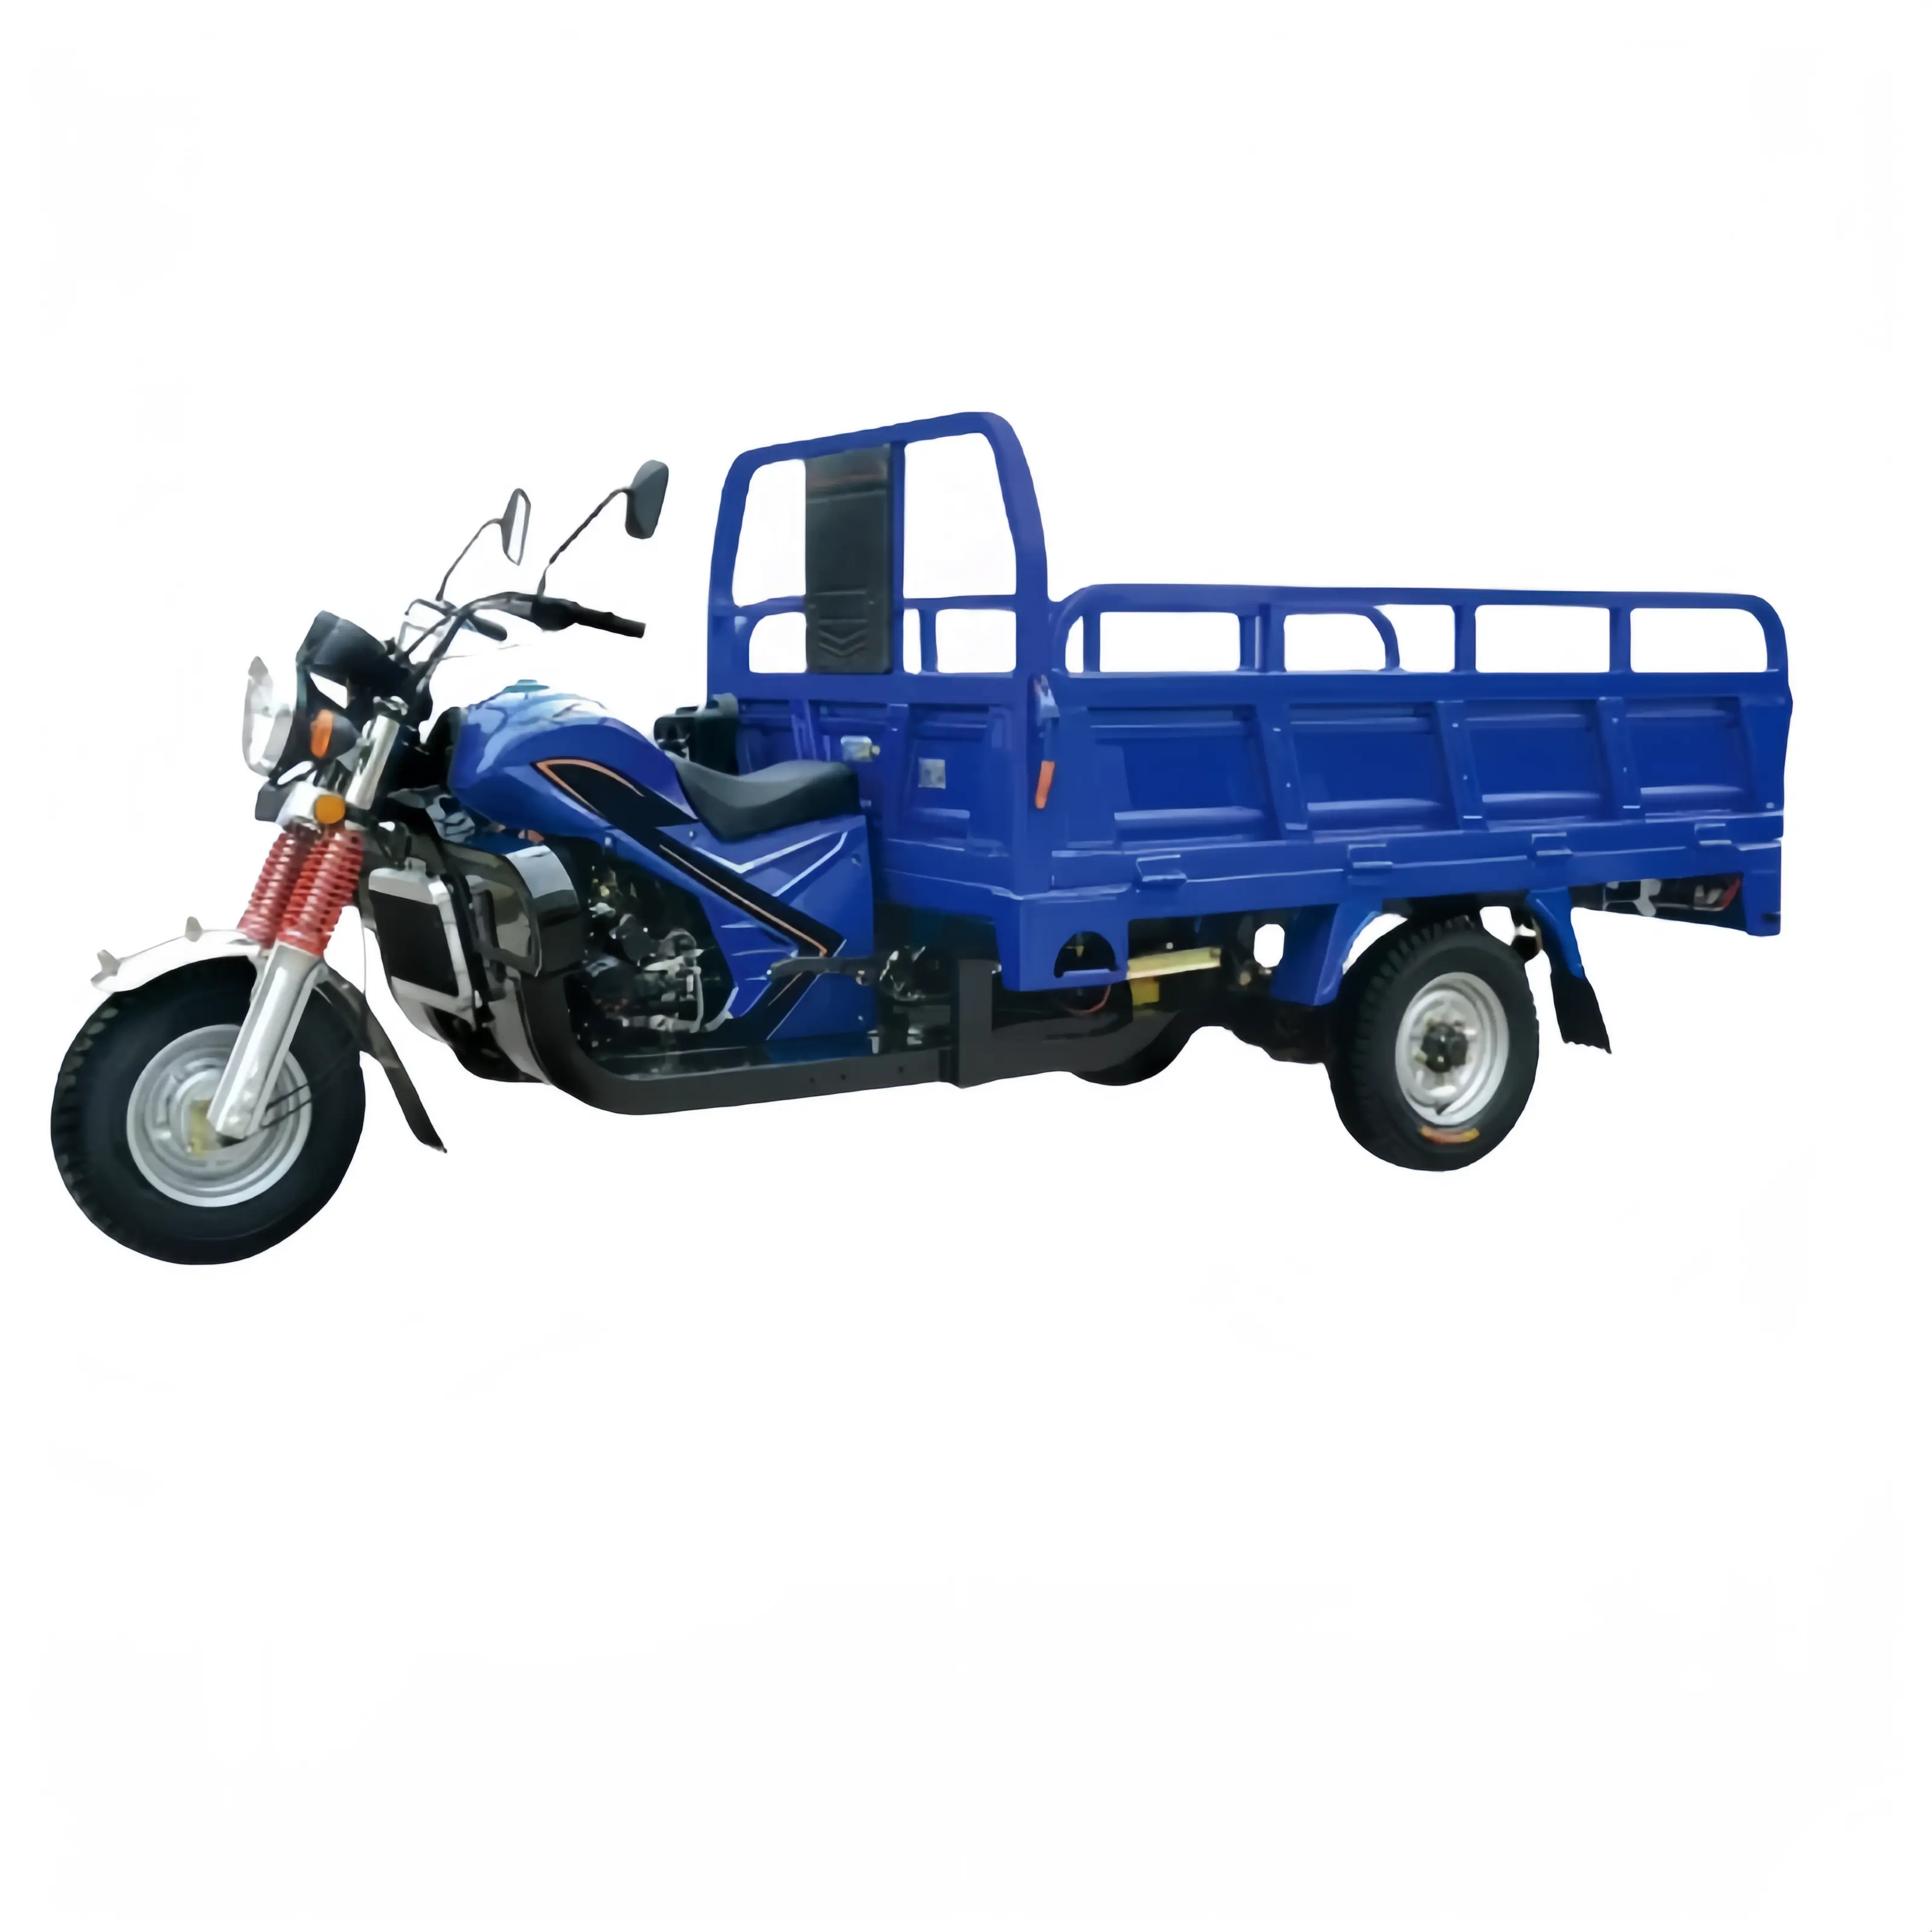 Mesin sepeda motor roda tiga 200cc dengan ZONGSHEN/LIFAN/LONCIN/YINXIANG 200cc mesin